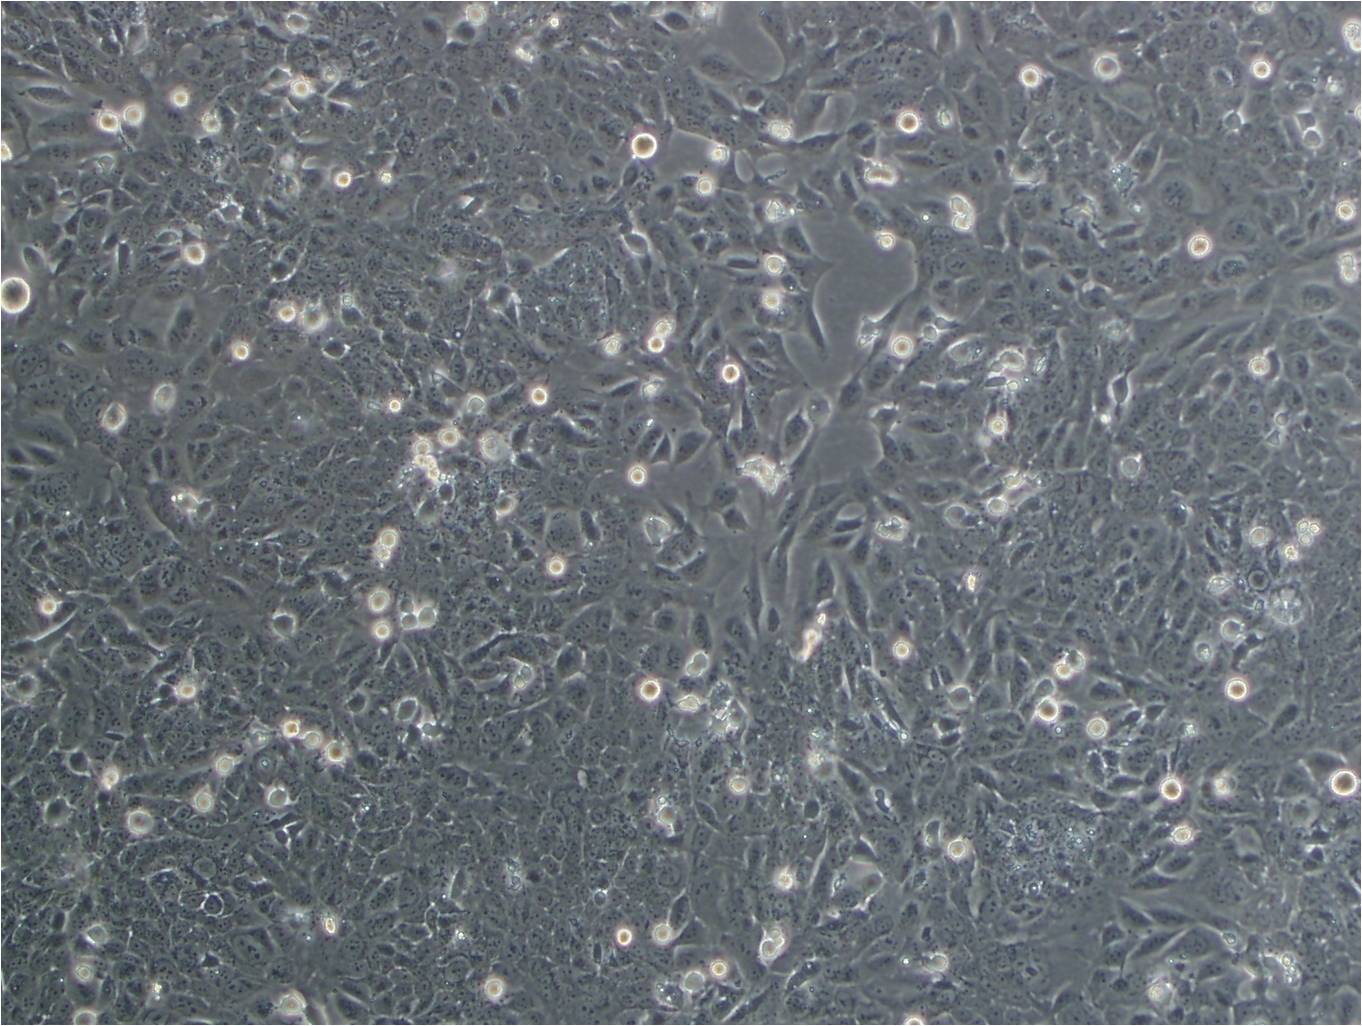 U-138MG Adherent人脑神经胶质瘤细胞系